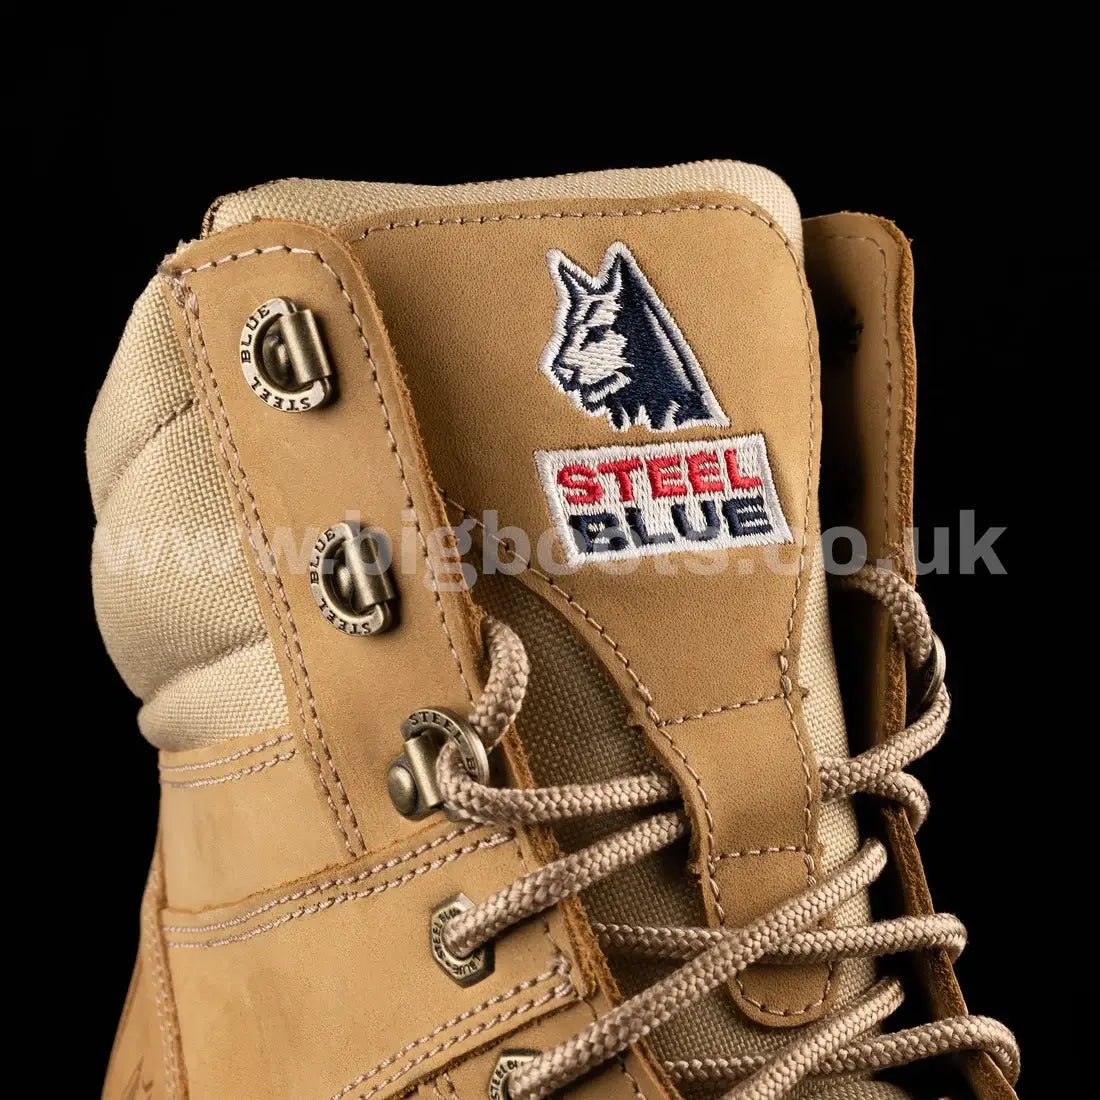 Steel Blue Mens Work Boots Southern Cross Zip S3 - SAND - BIG Boots UK